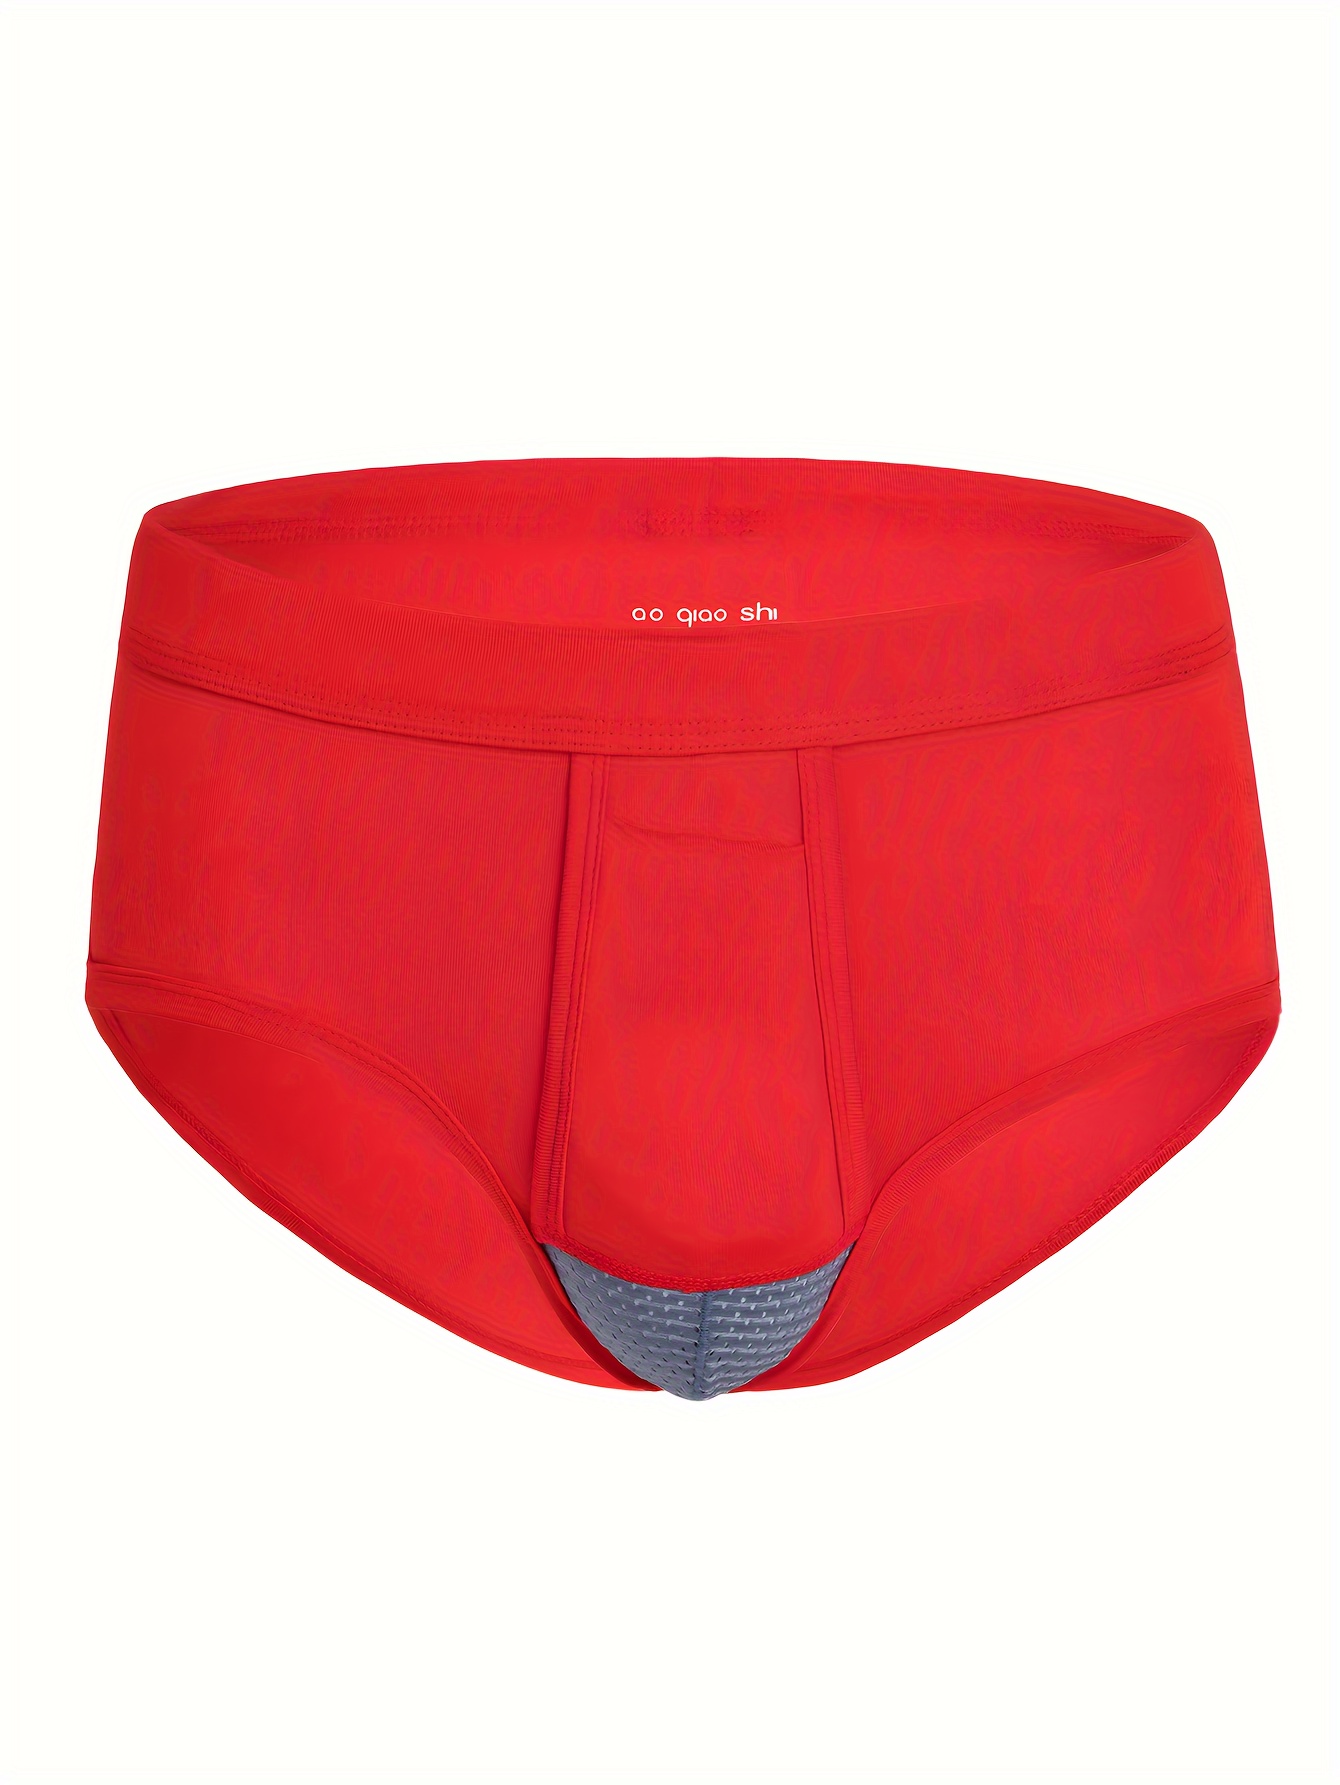 BfM Mens Mid-rise Pouch Bikini Tanga Underwear – Bodywear for Men